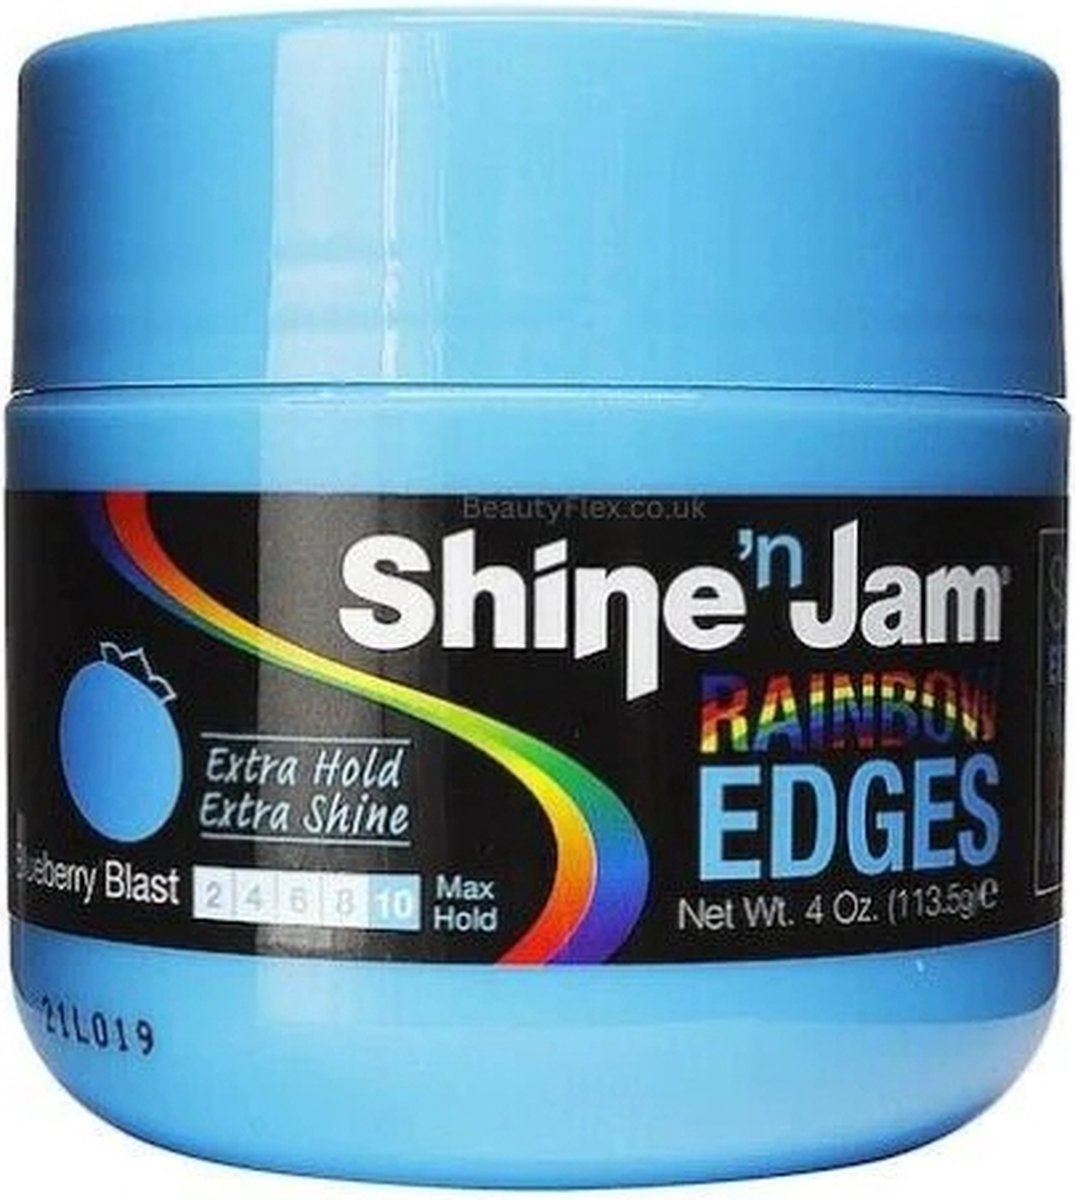 Ampro Shine 'n Jam Rainbow Edges Blueberry Blast 4oz